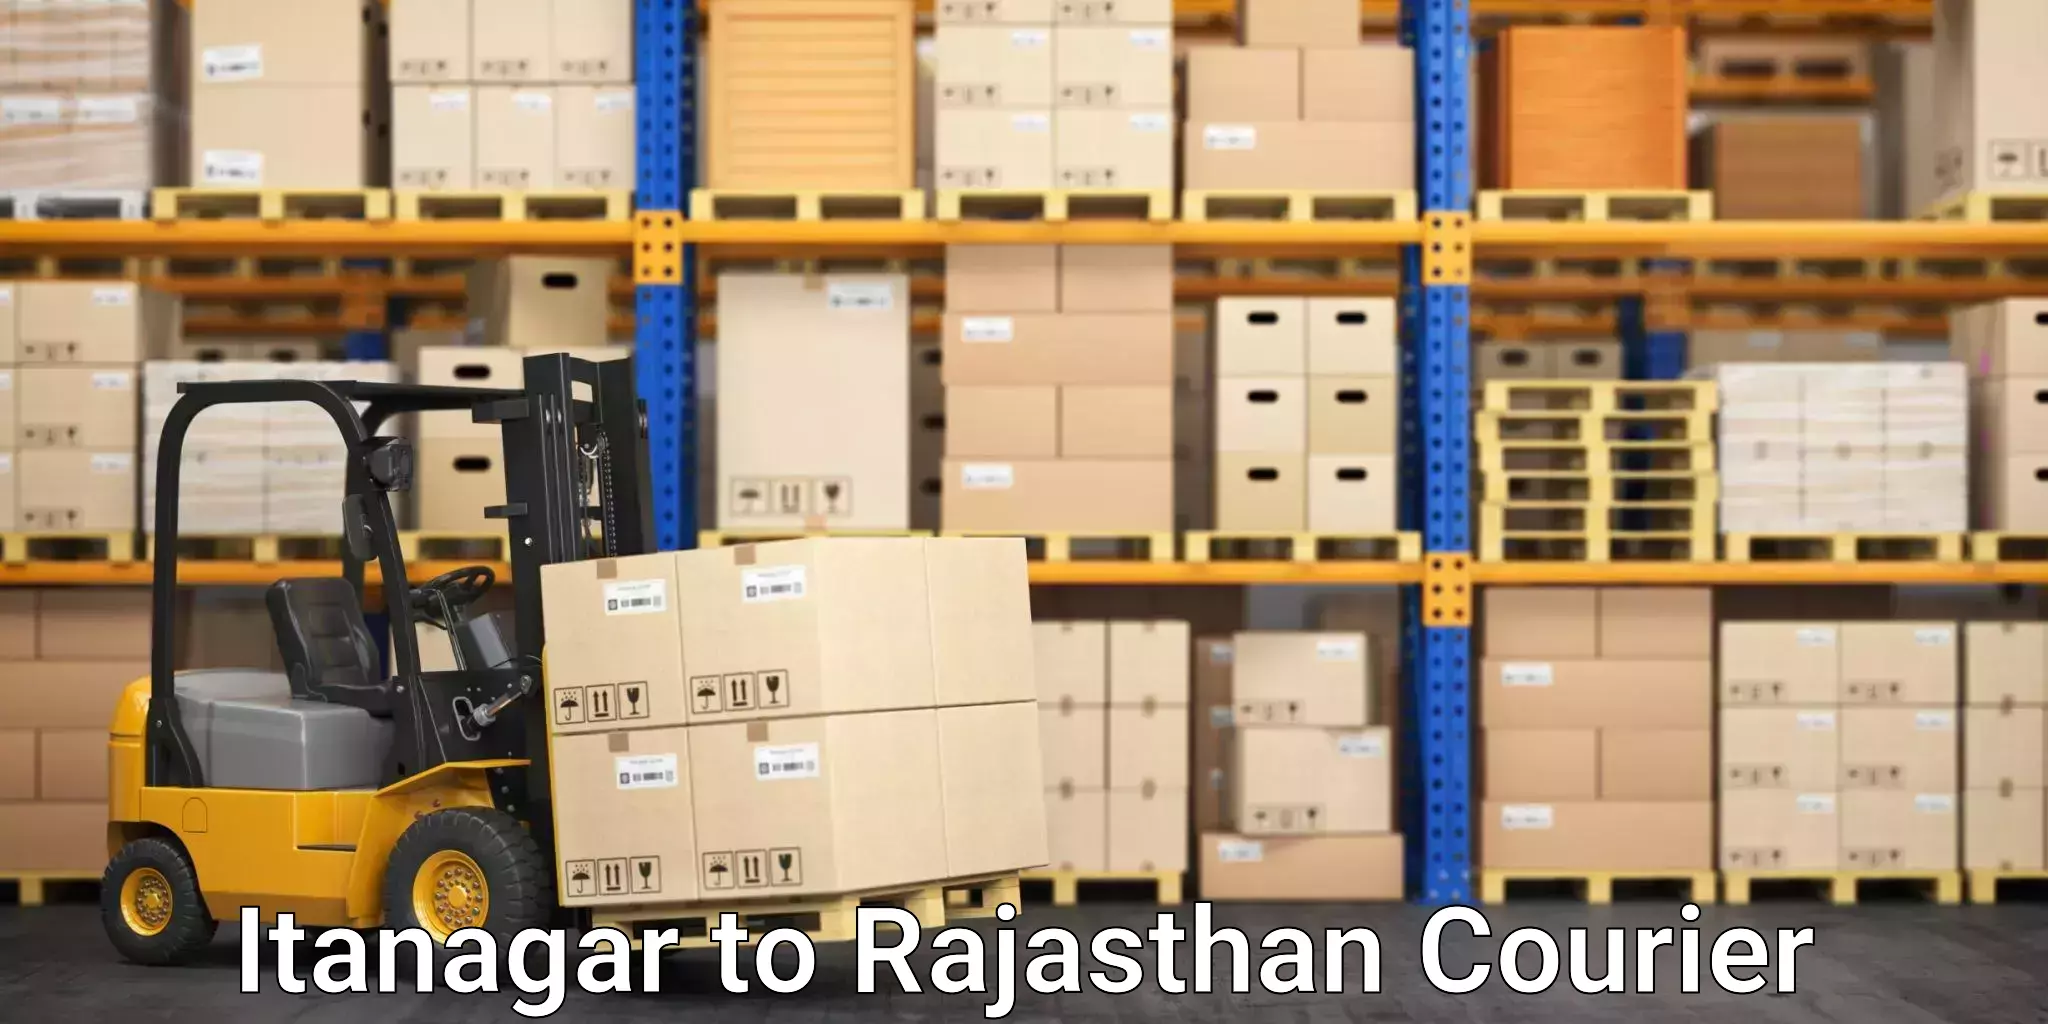 Global logistics network Itanagar to Nagar